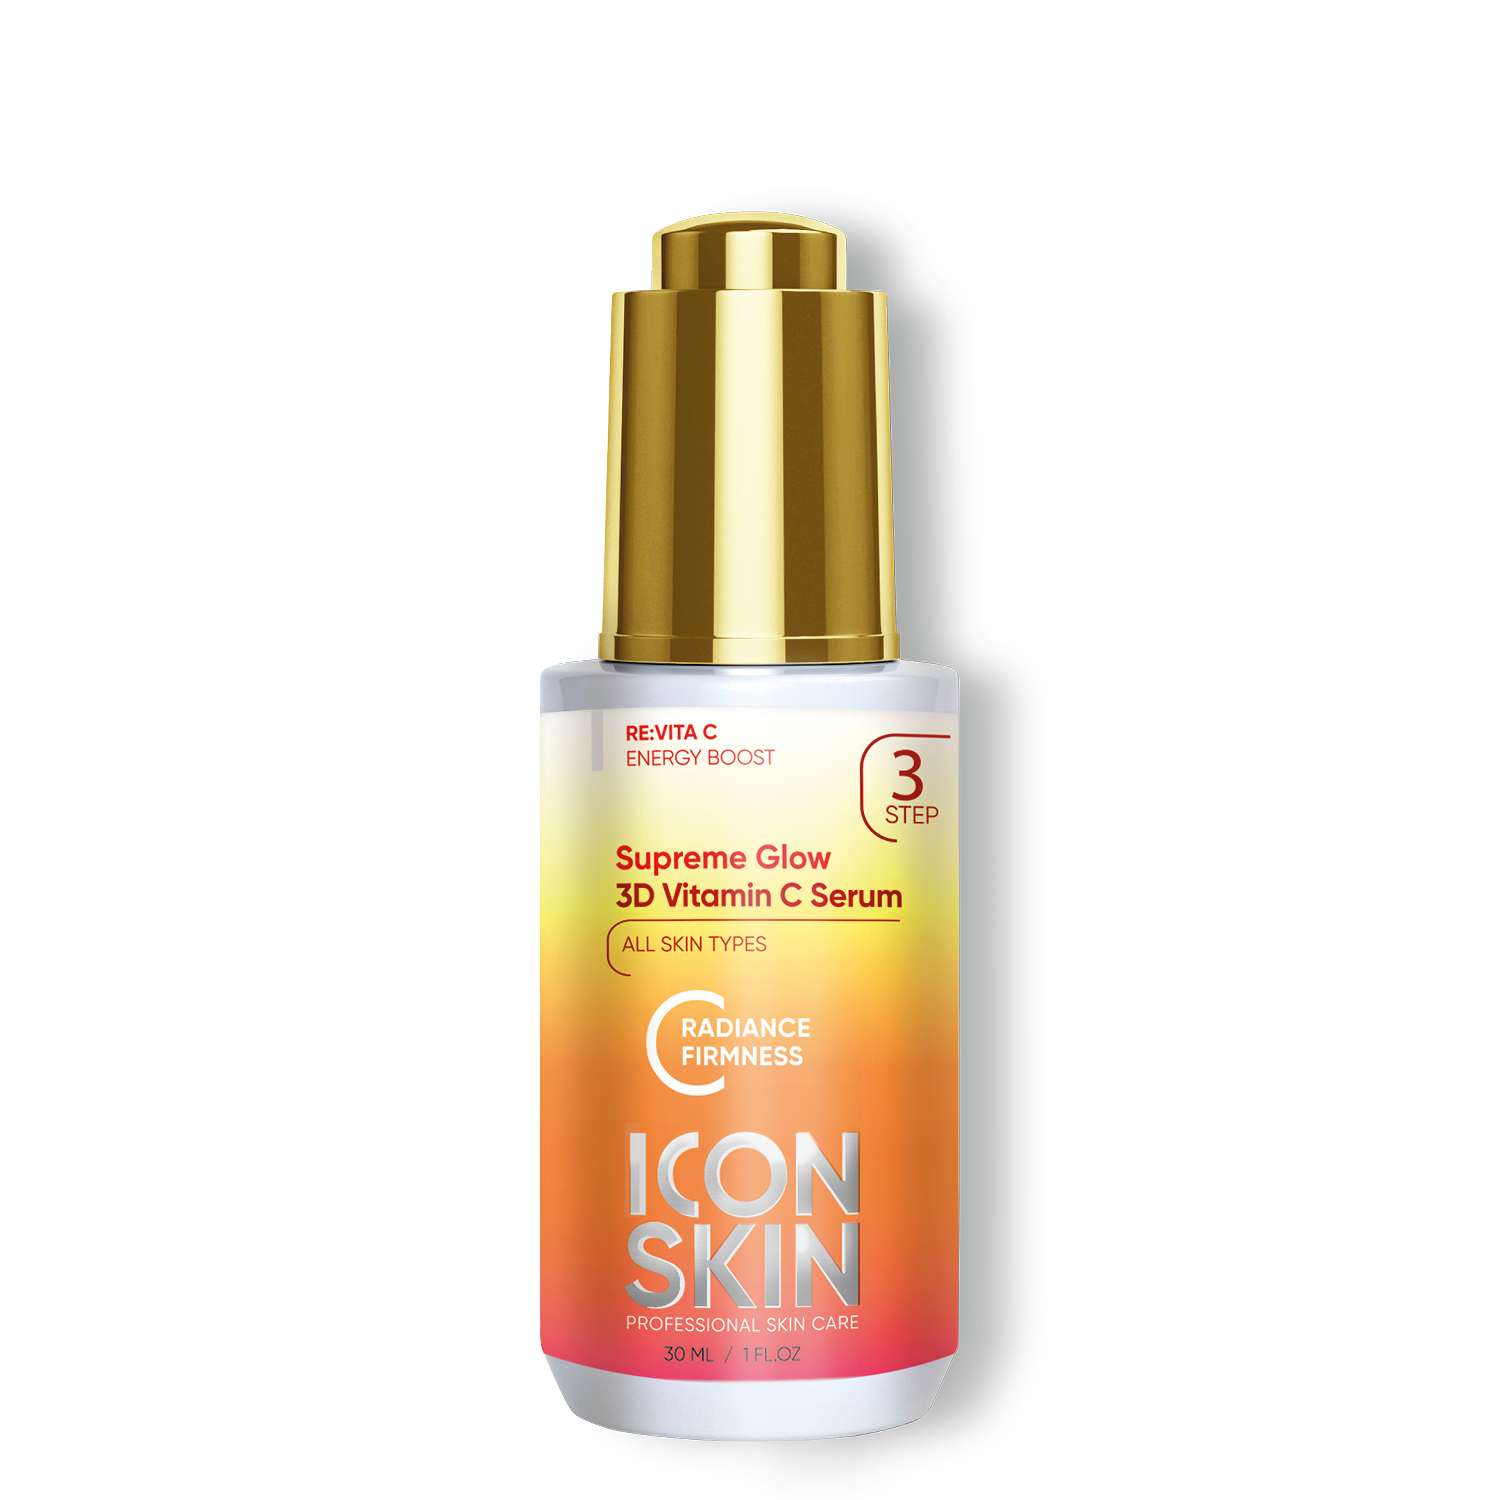 Сыворотка ICON SKIN с 3d витамином с supreme glow 30 мл - фото 1